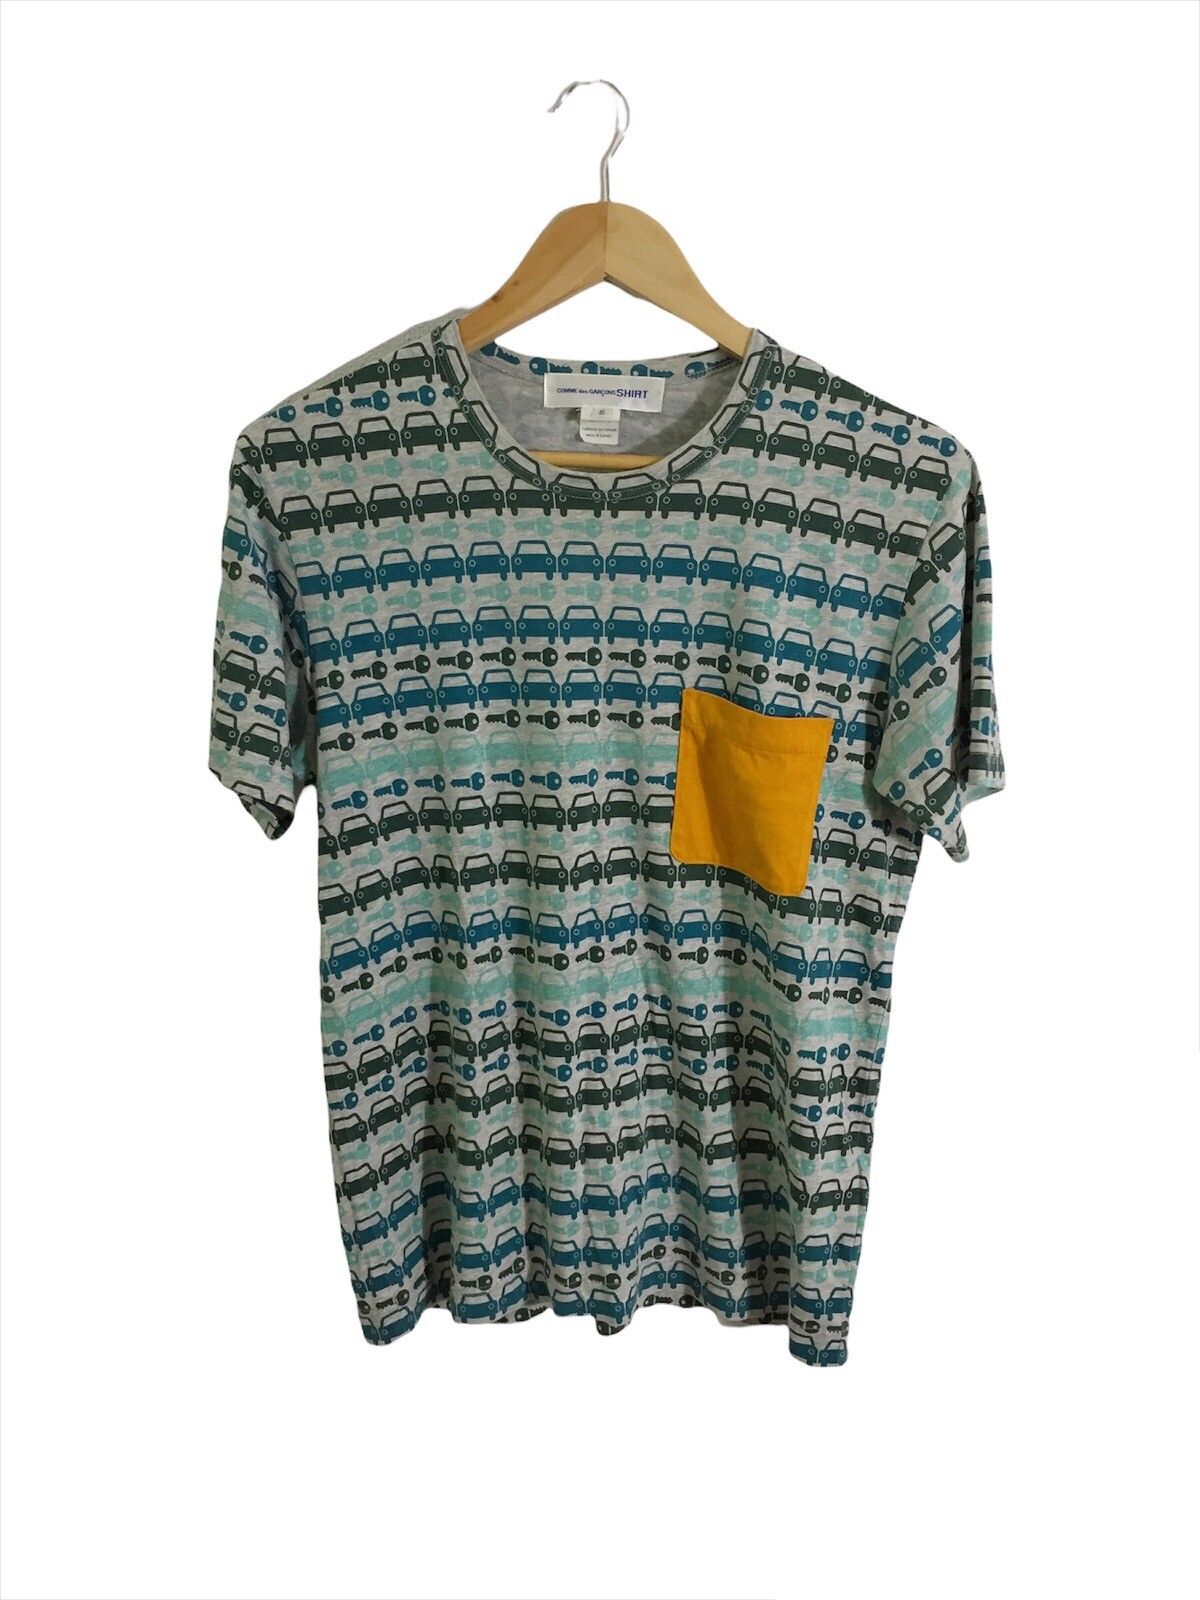 AW11 Comme Des Garcons “ Car Keys “ Stripes Pocket Tee Shirt - 1